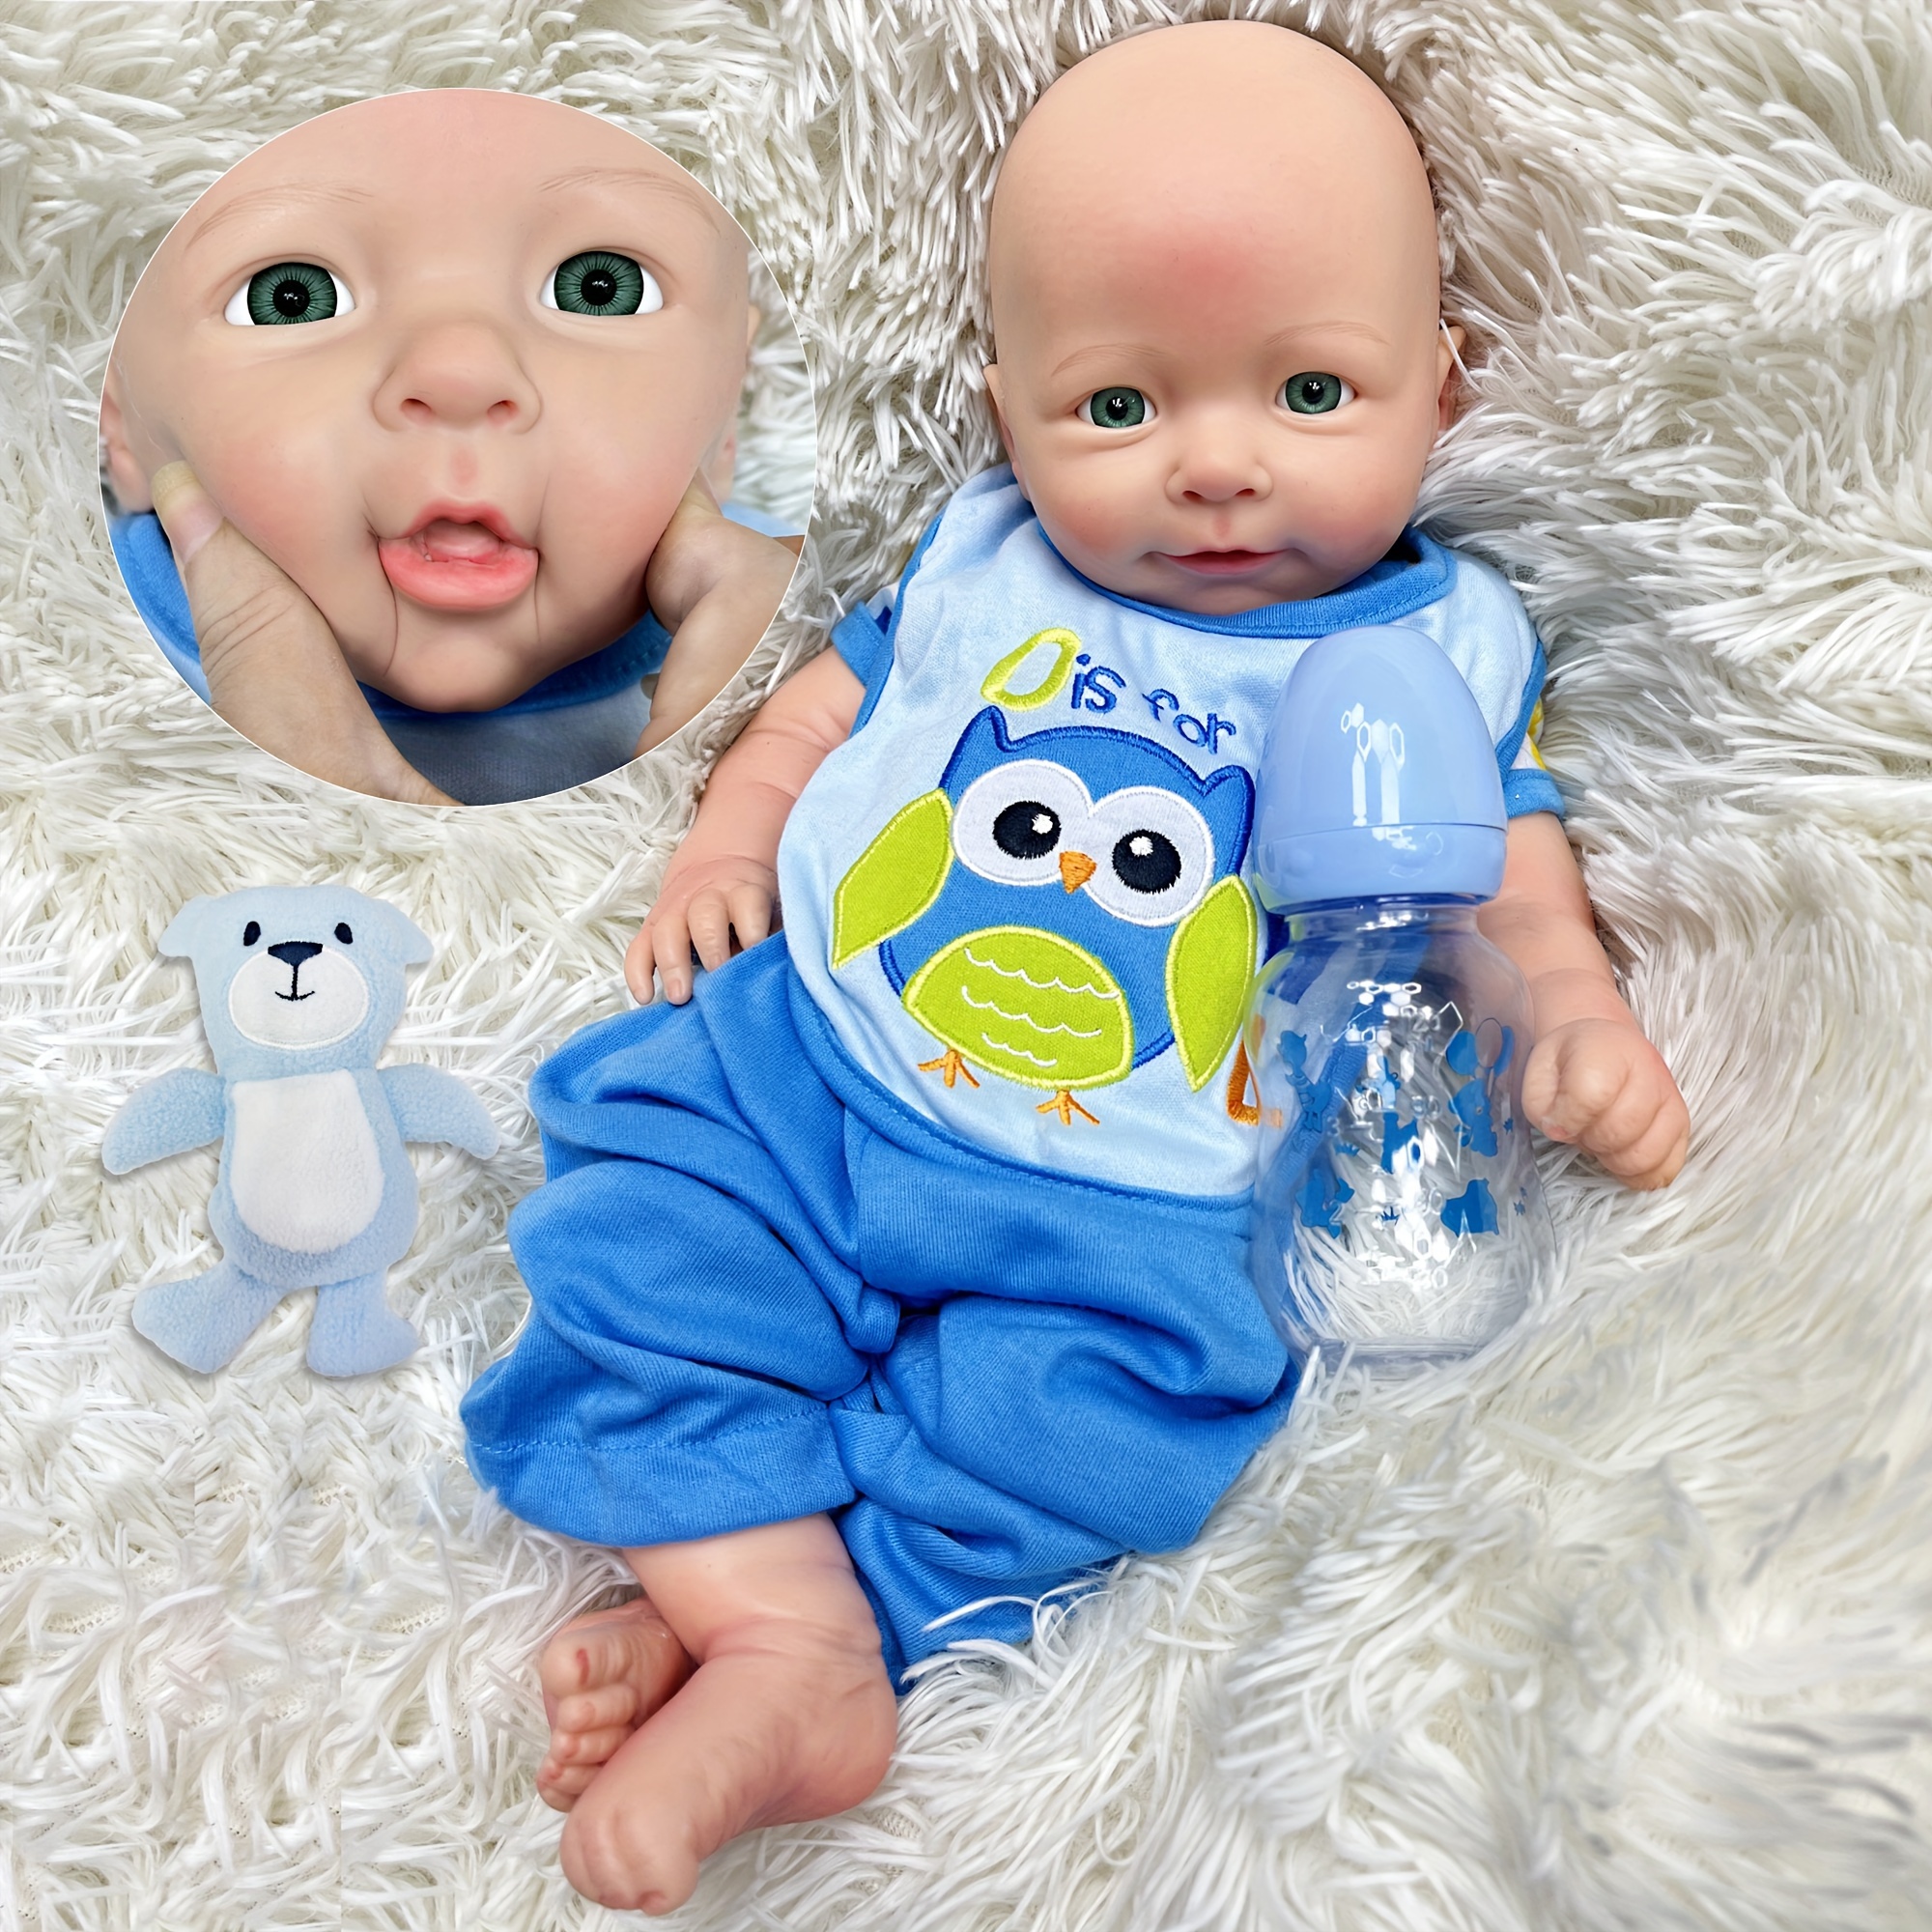 16inch Reborn Baby Dolls Full Body Silicone Realistic Bebe Boneca Newborn  Sleeping Boy Soft Touch Toys For Children Kids Gifts